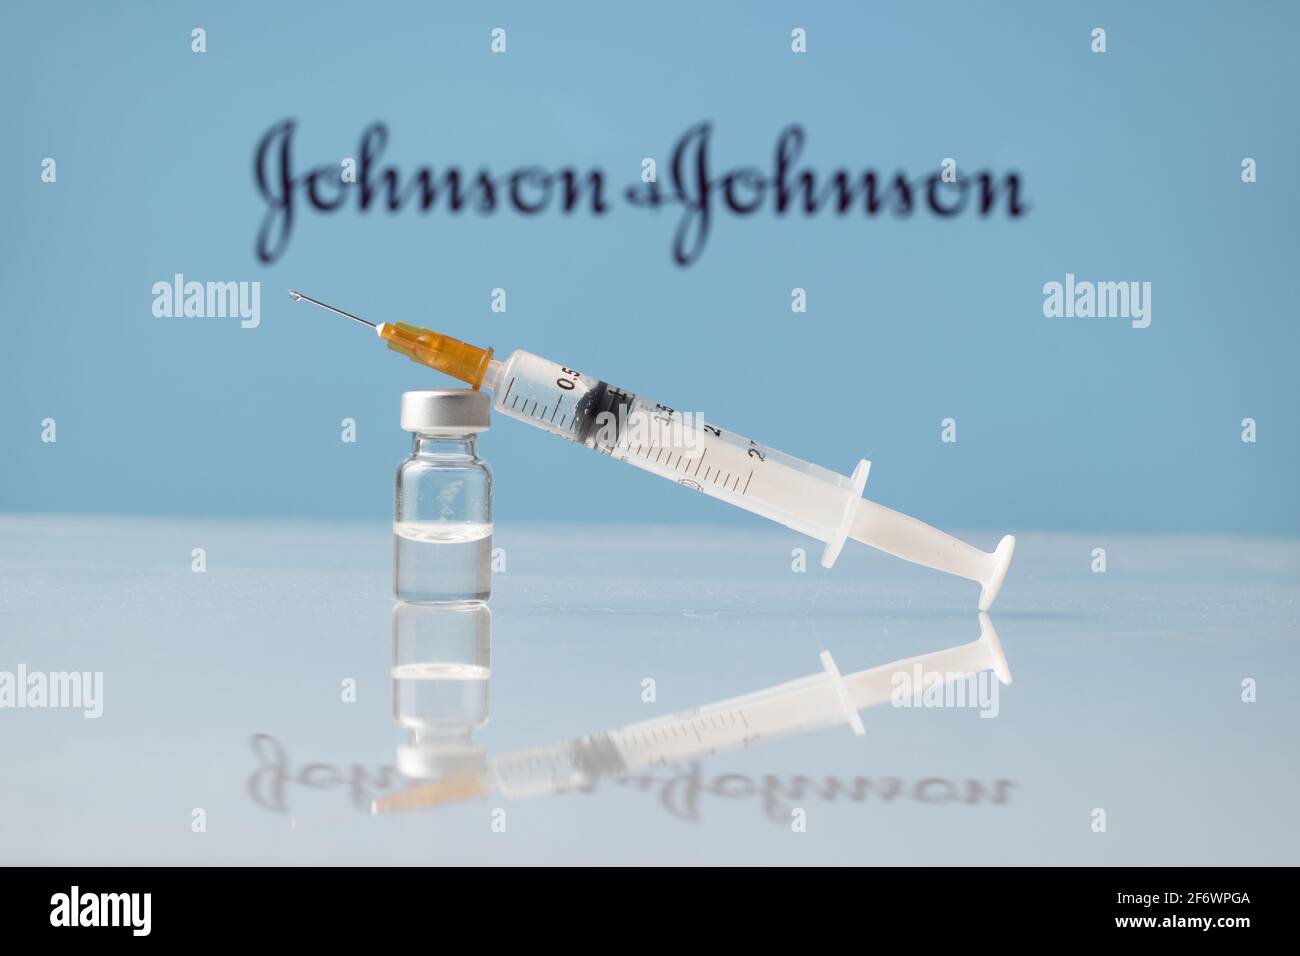 Johnson and Johnson Coronavirus Vaccine vial and syringe with logo as background. LJUBLJANA, SLOVENIA: March 25, 2021 Stock Photo